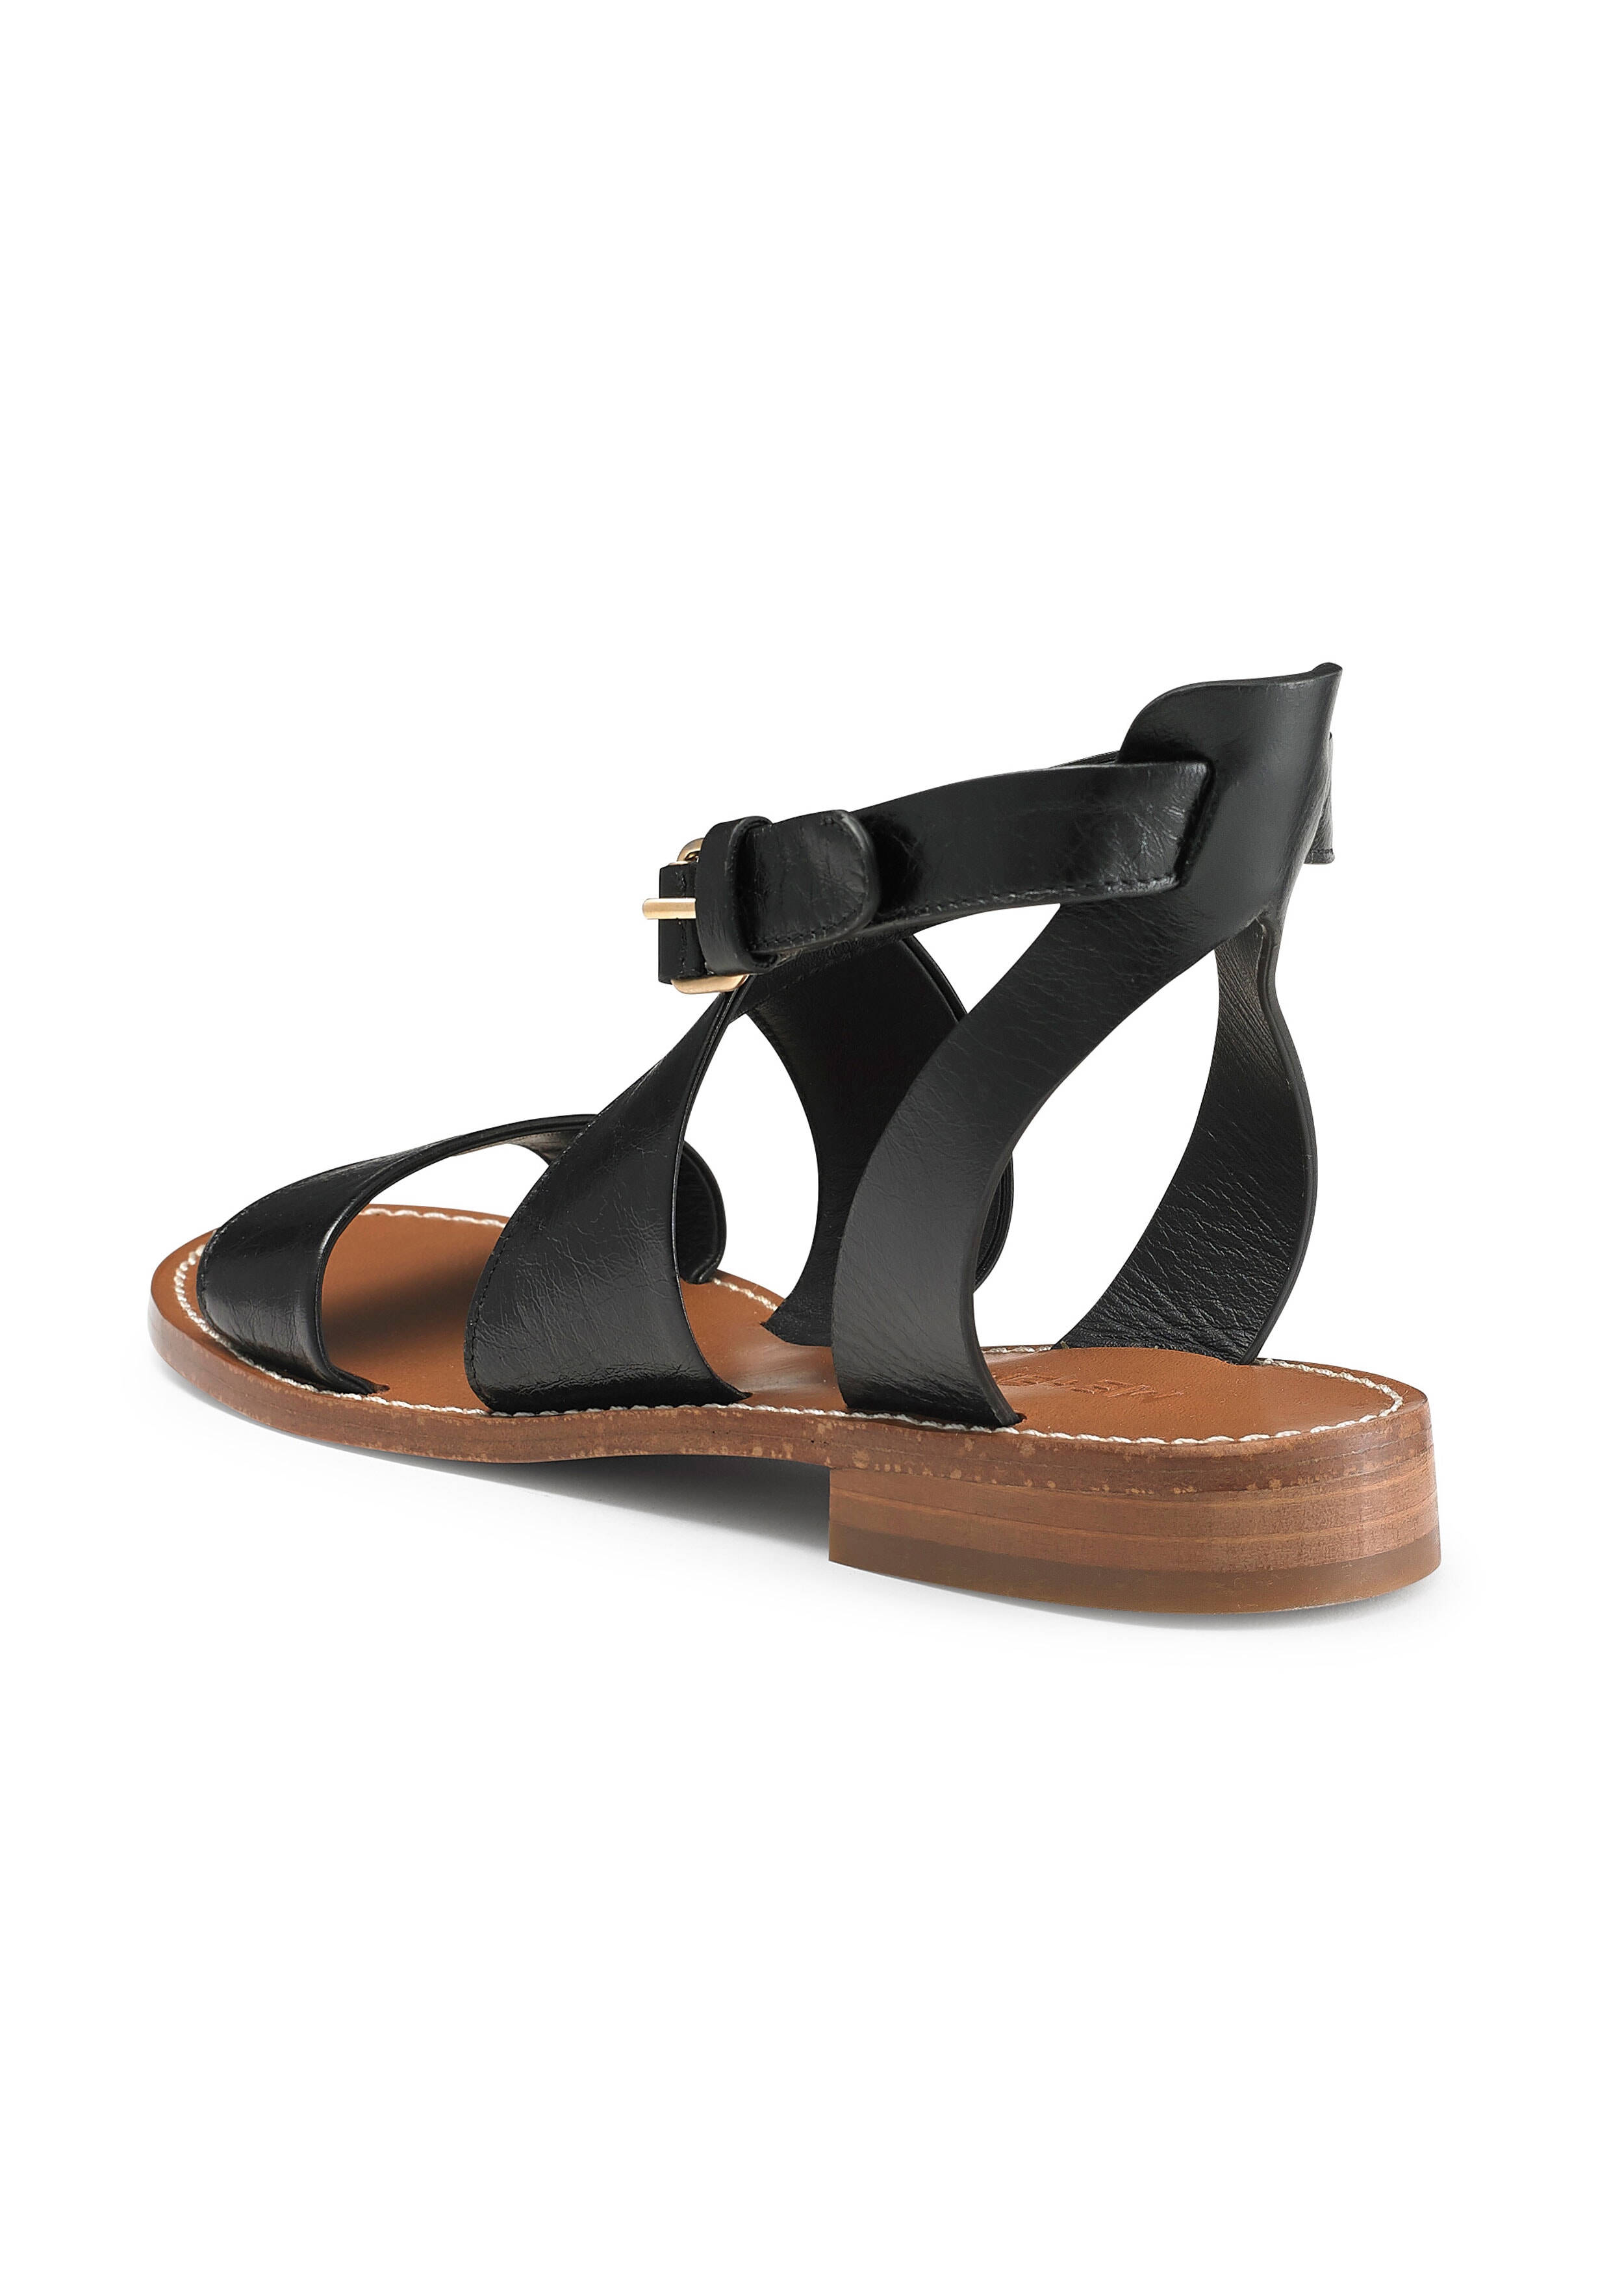 Ankle Strap Crossover Sandal Black/Tan